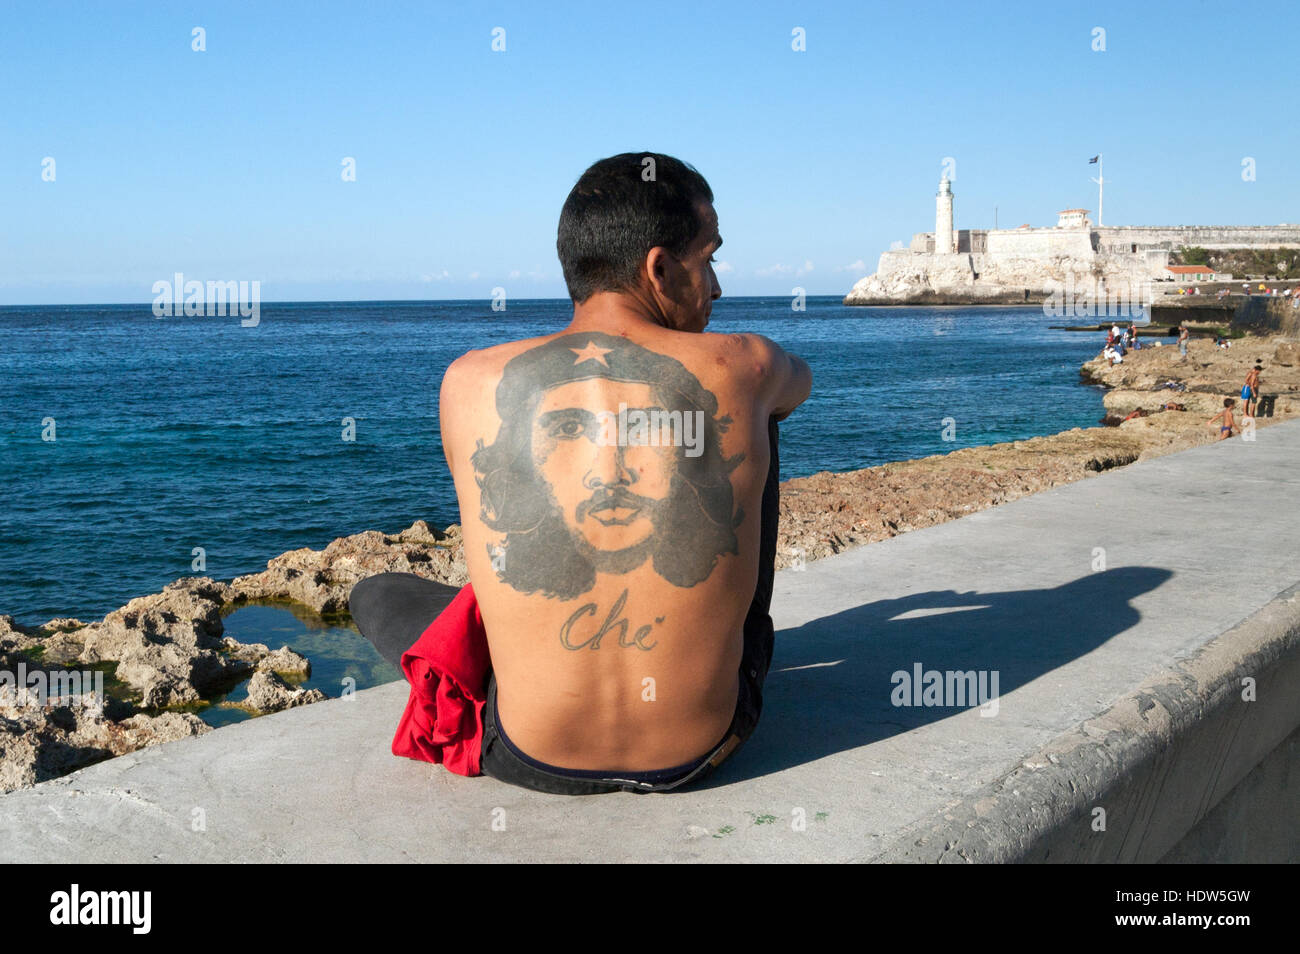 Street City Tattoos on Twitter Todays Che Guevara piece sirfocus  streetcitytattoos IS the studio toronto  mississaughttpstcodpNqEaFb3j httpstco8R7qoBFYnX  Twitter